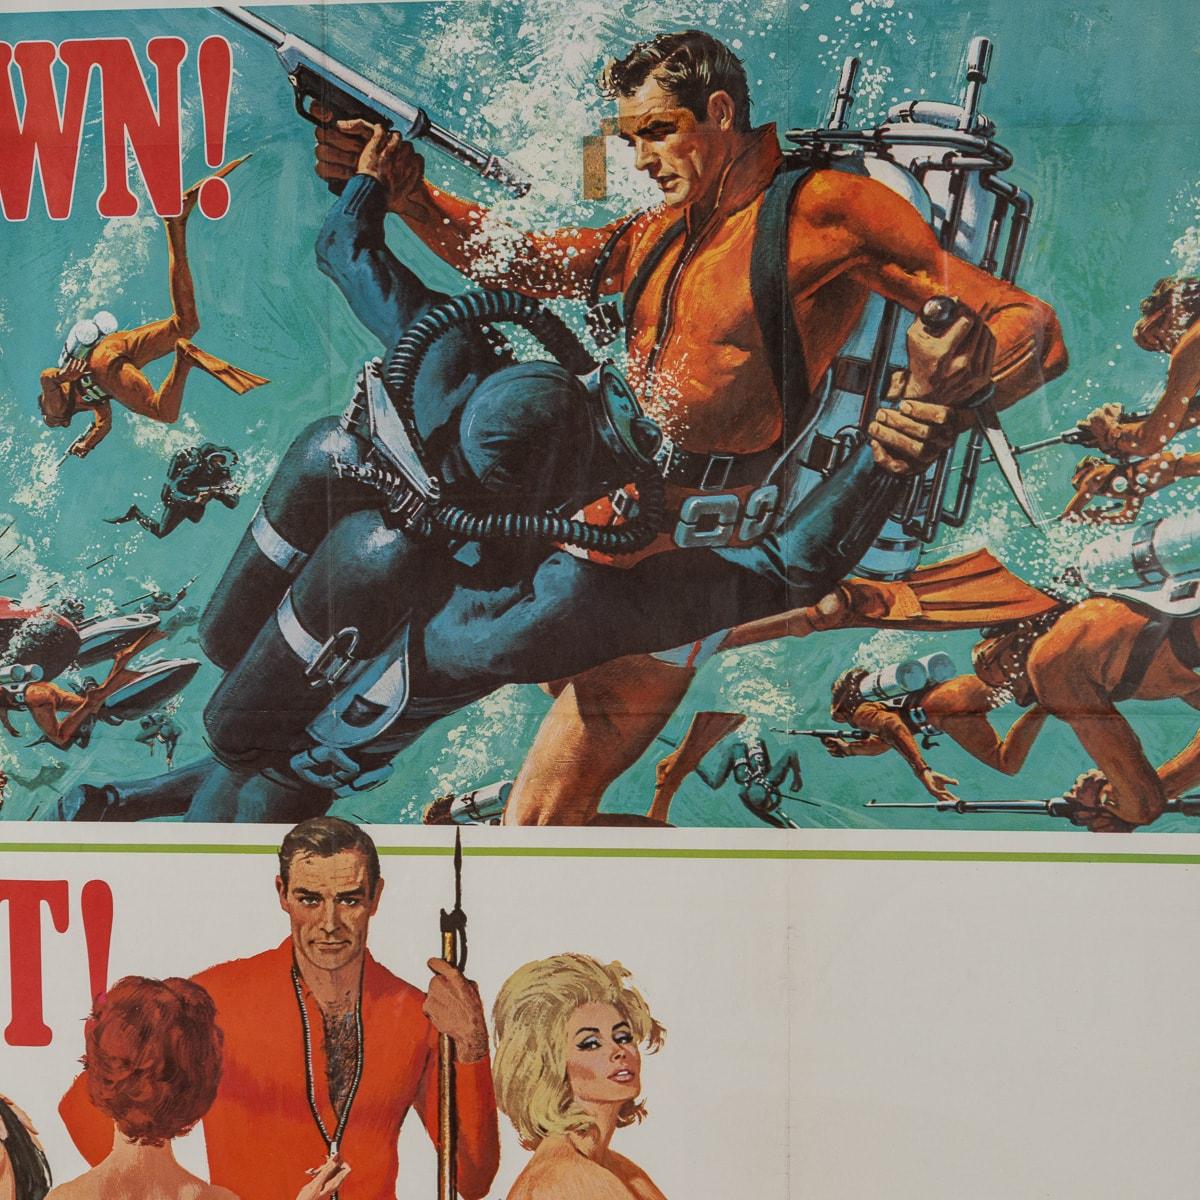 Original U.S James Bond 007 'Thunderball' Poster c.1965 For Sale 1